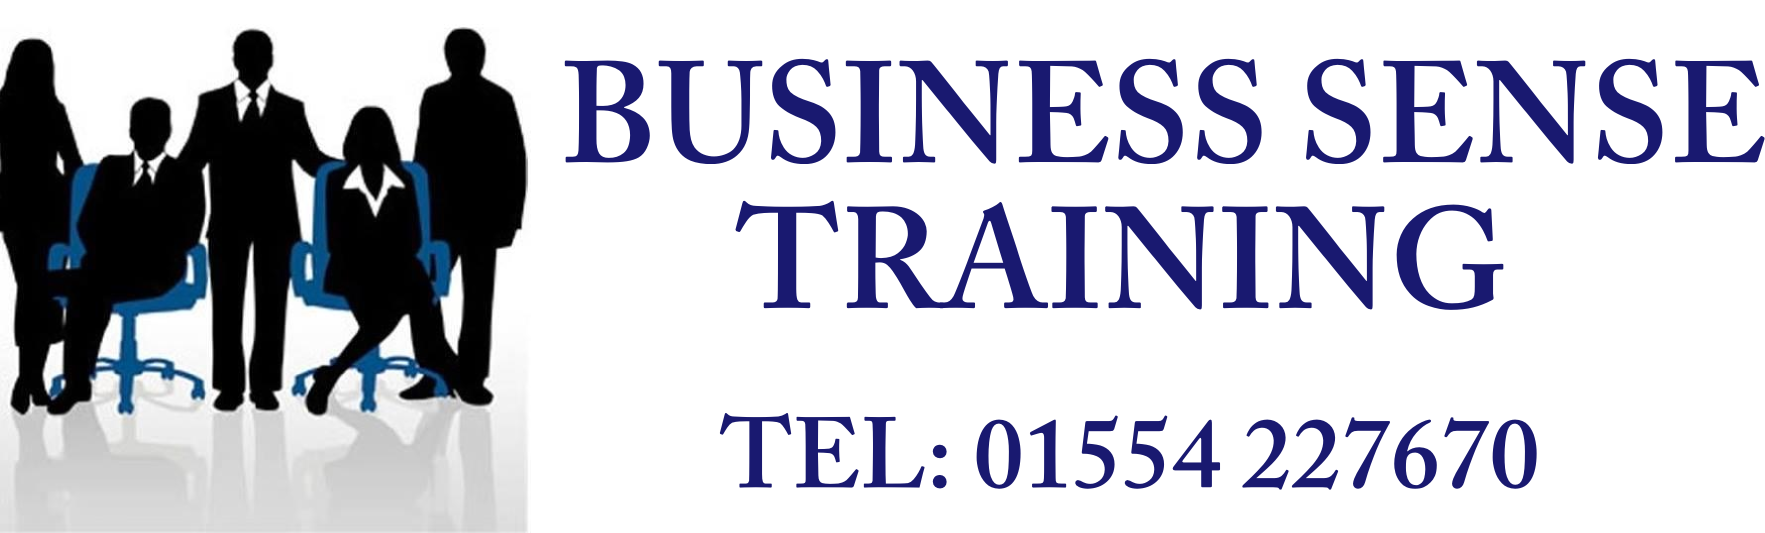 Business Sense Training Logo